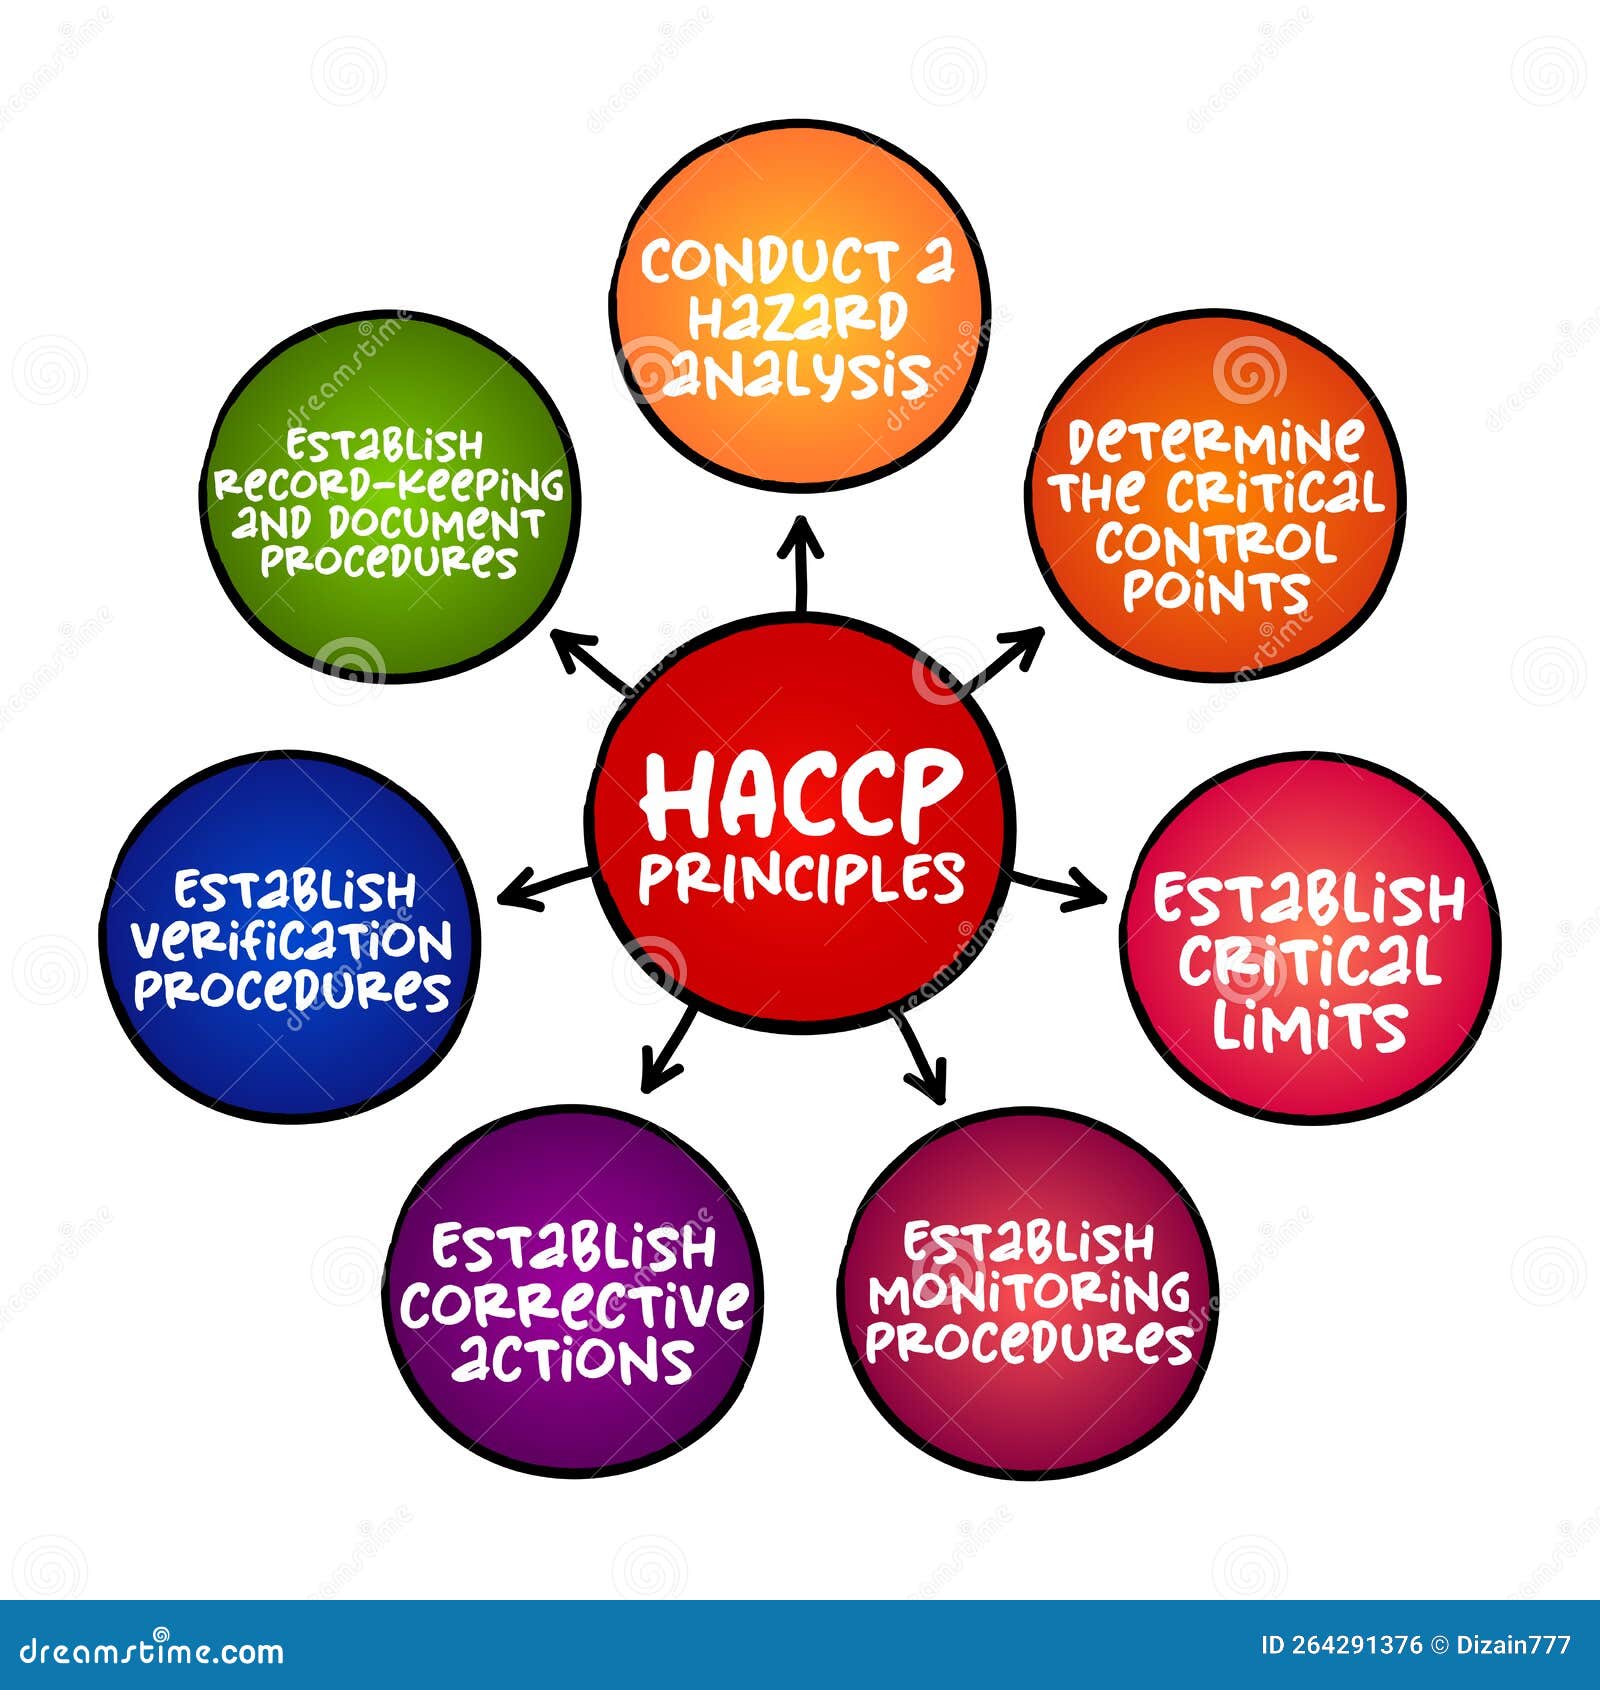 Haccp Flow Chart